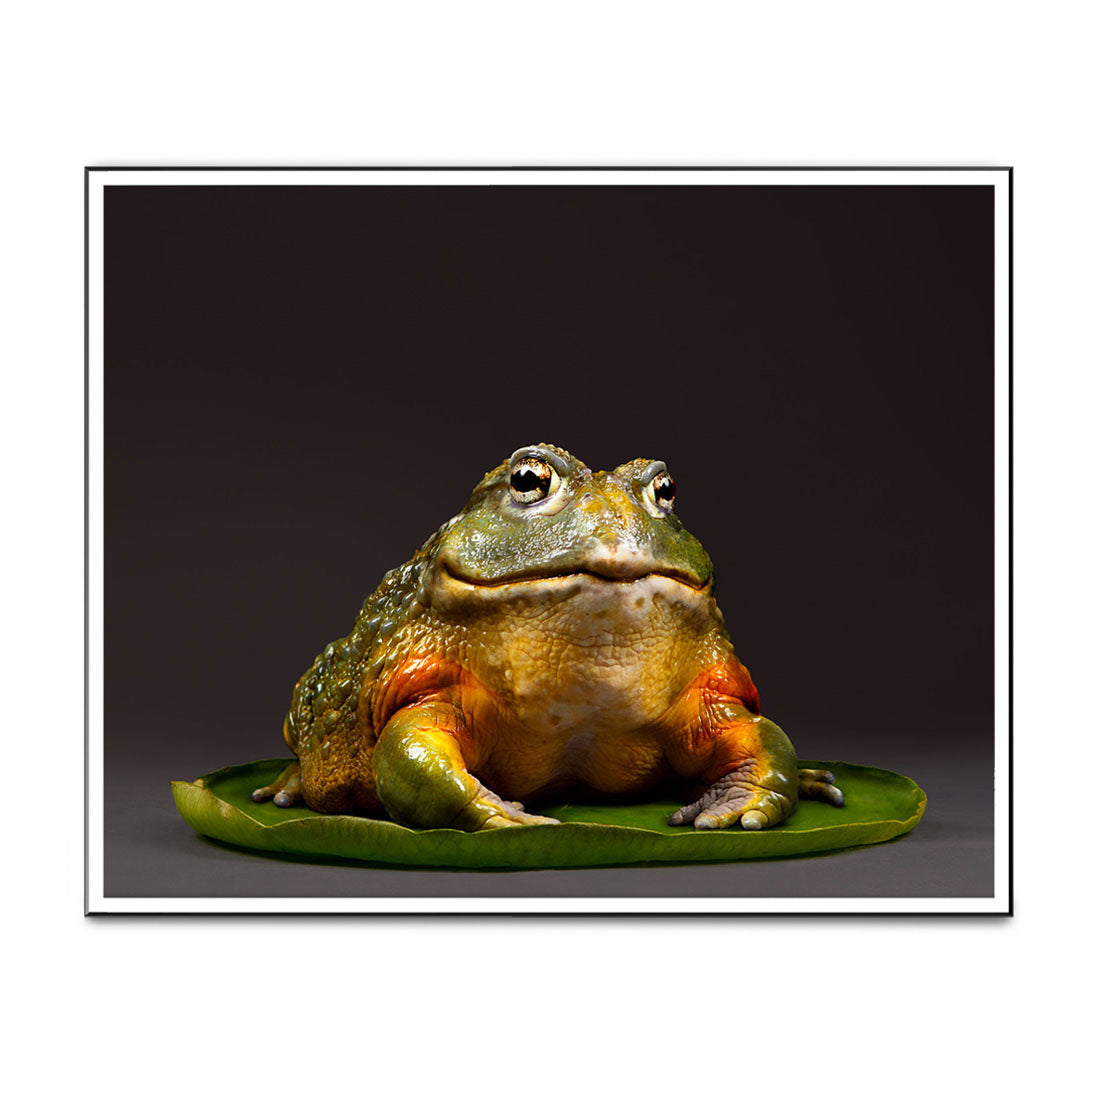 Oberon the Pixie Frog